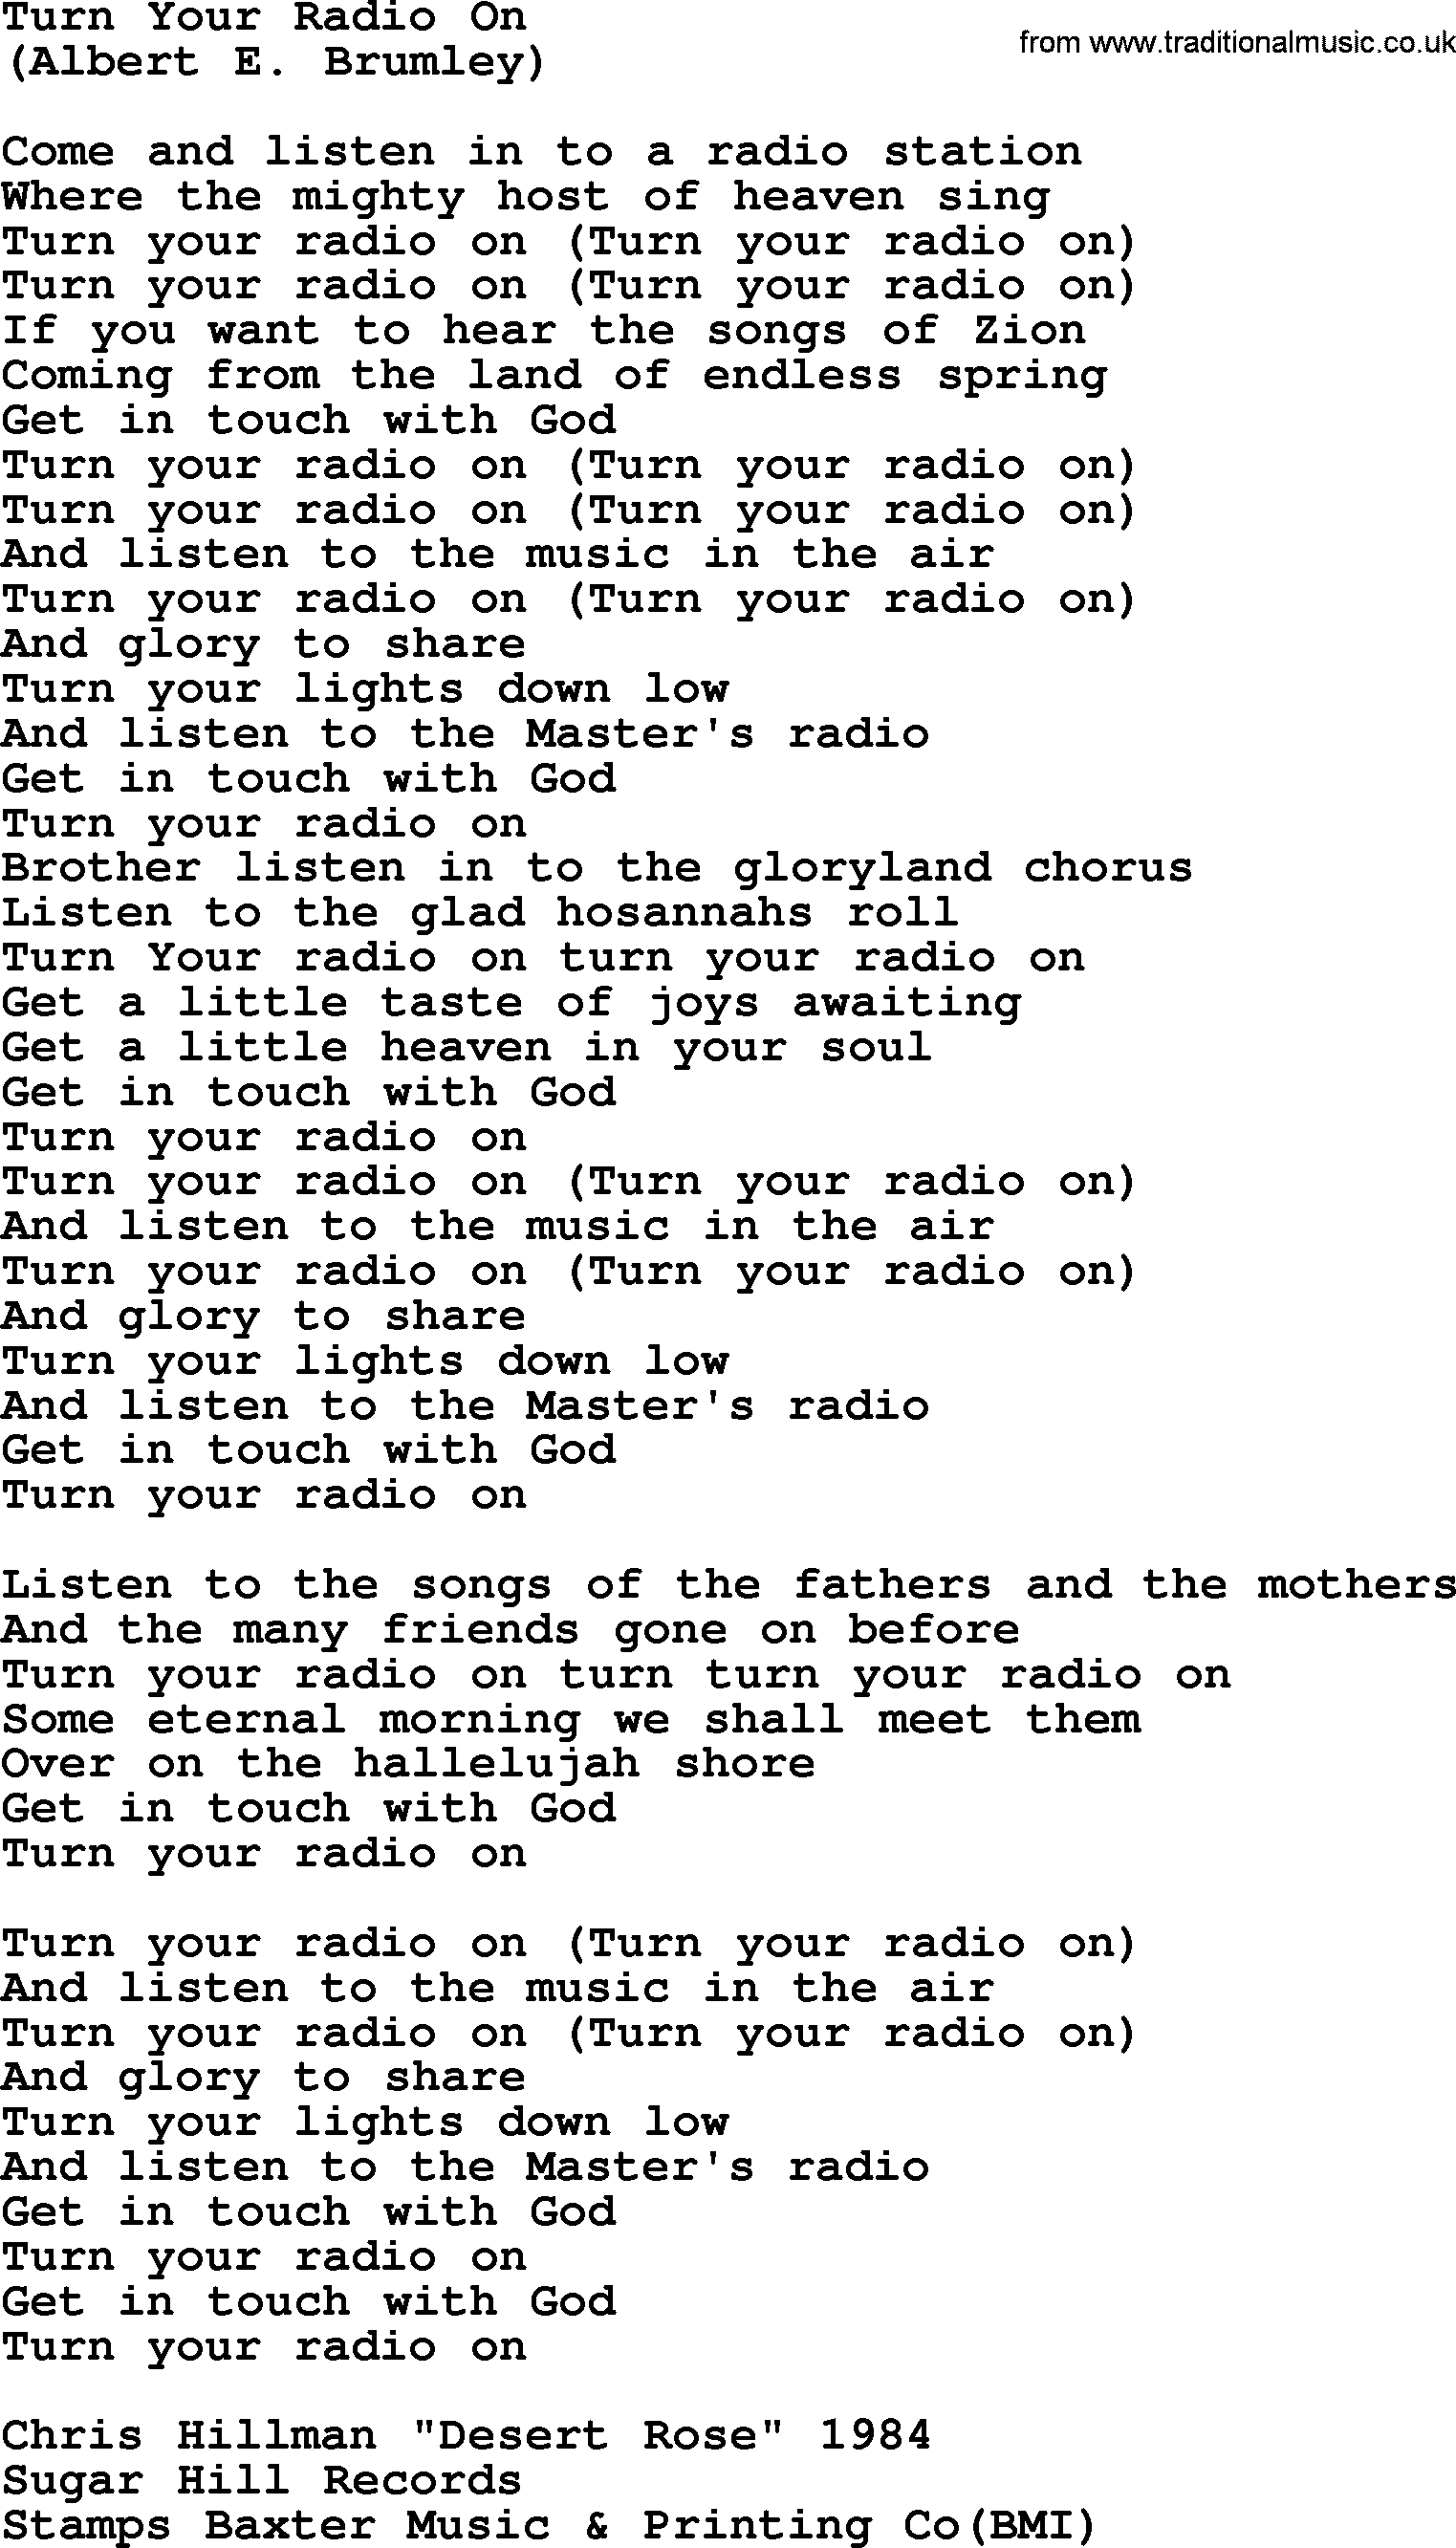 The Byrds song Turn Your Radio On, lyrics